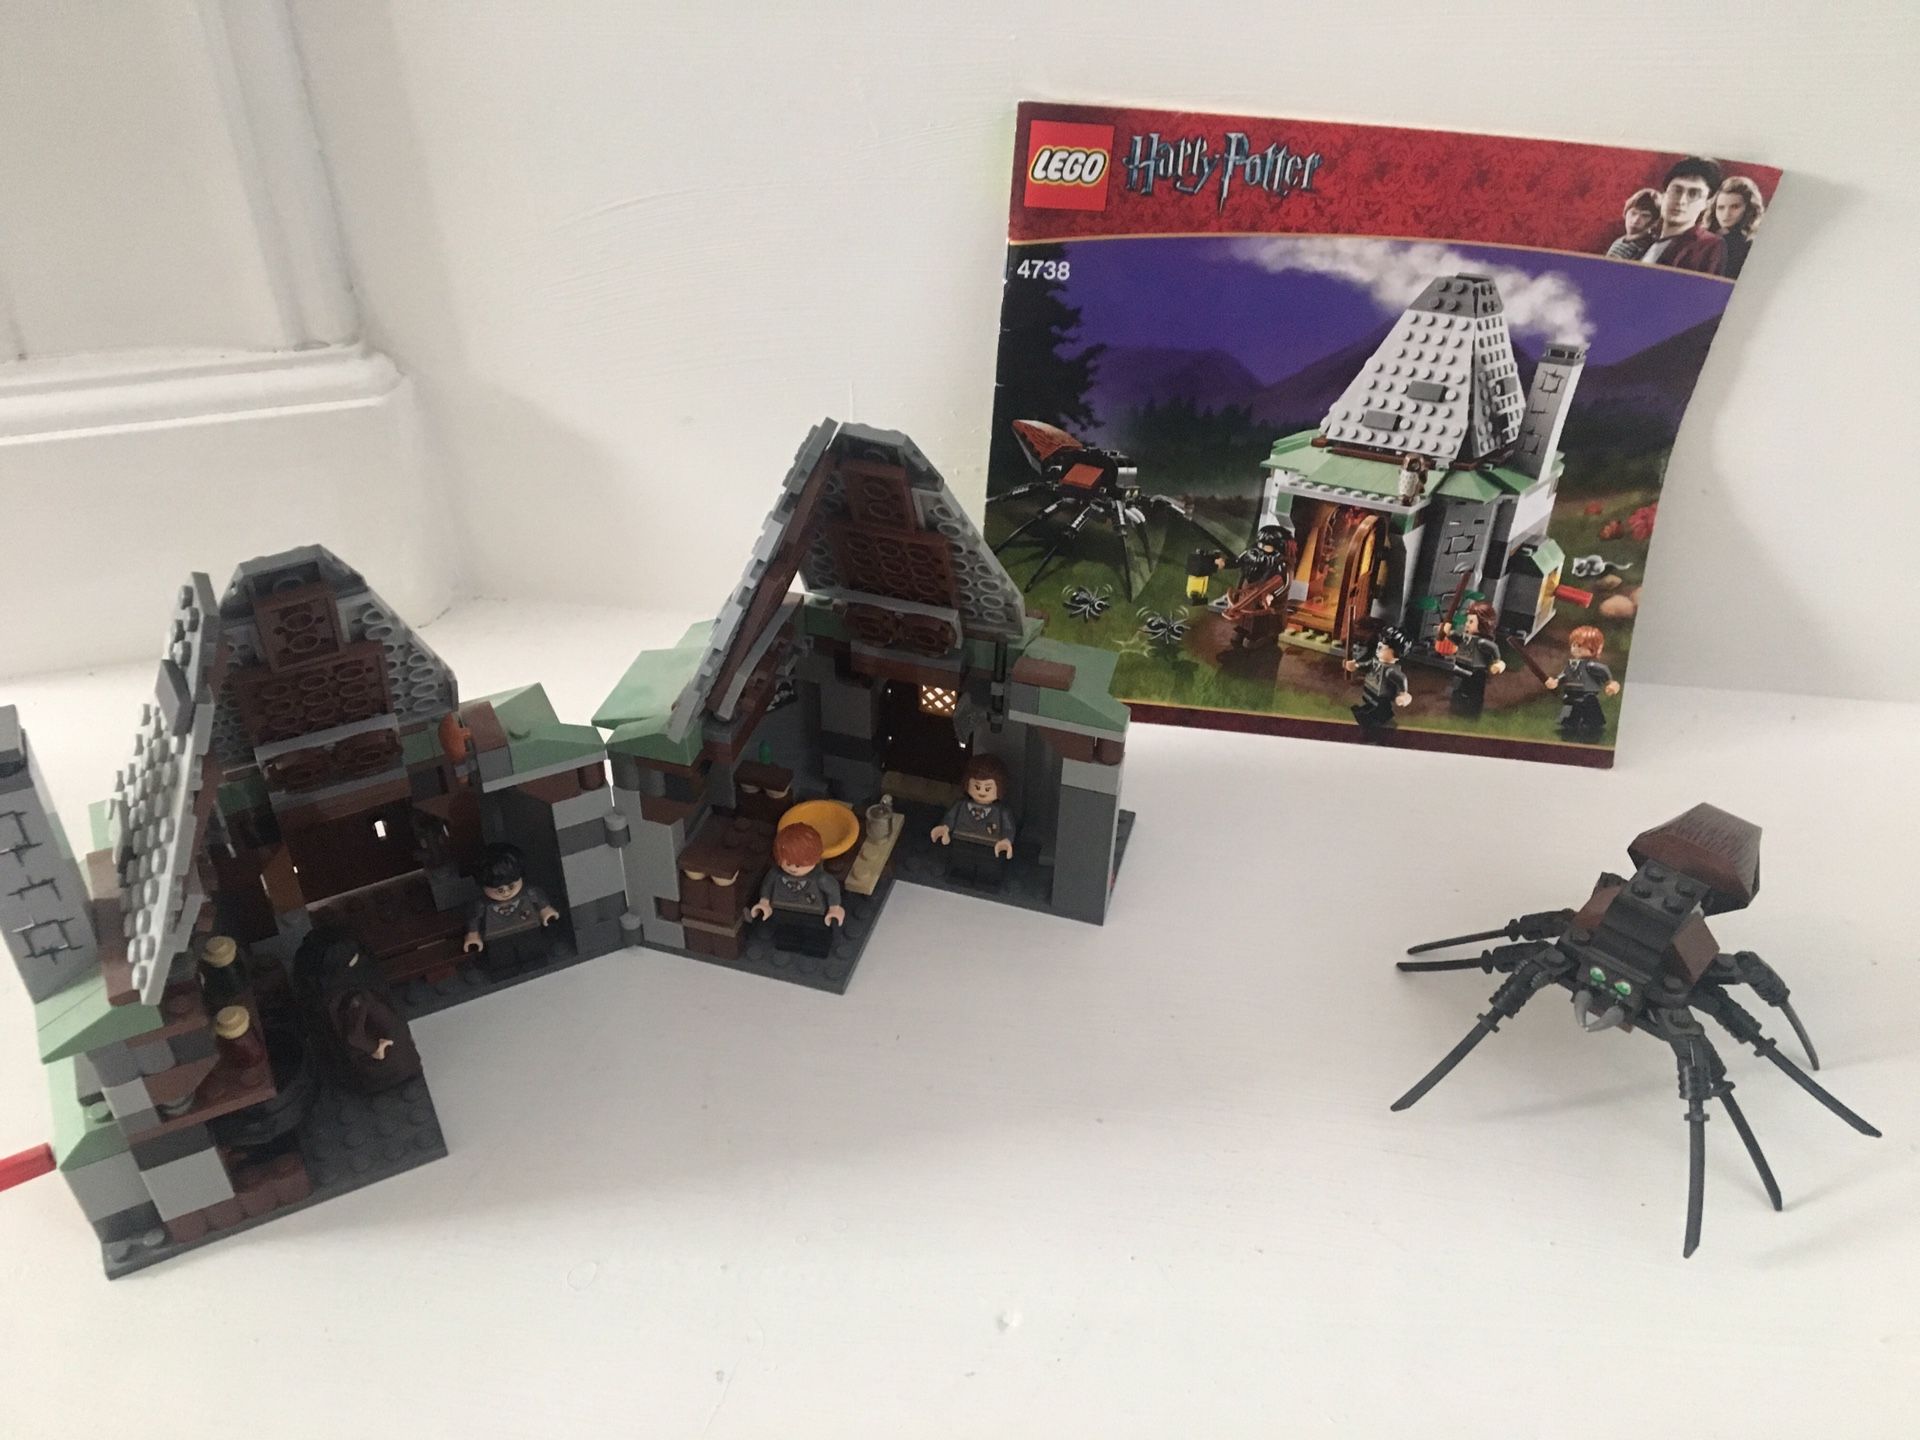 Lego Harry Potter hagrid’s hut